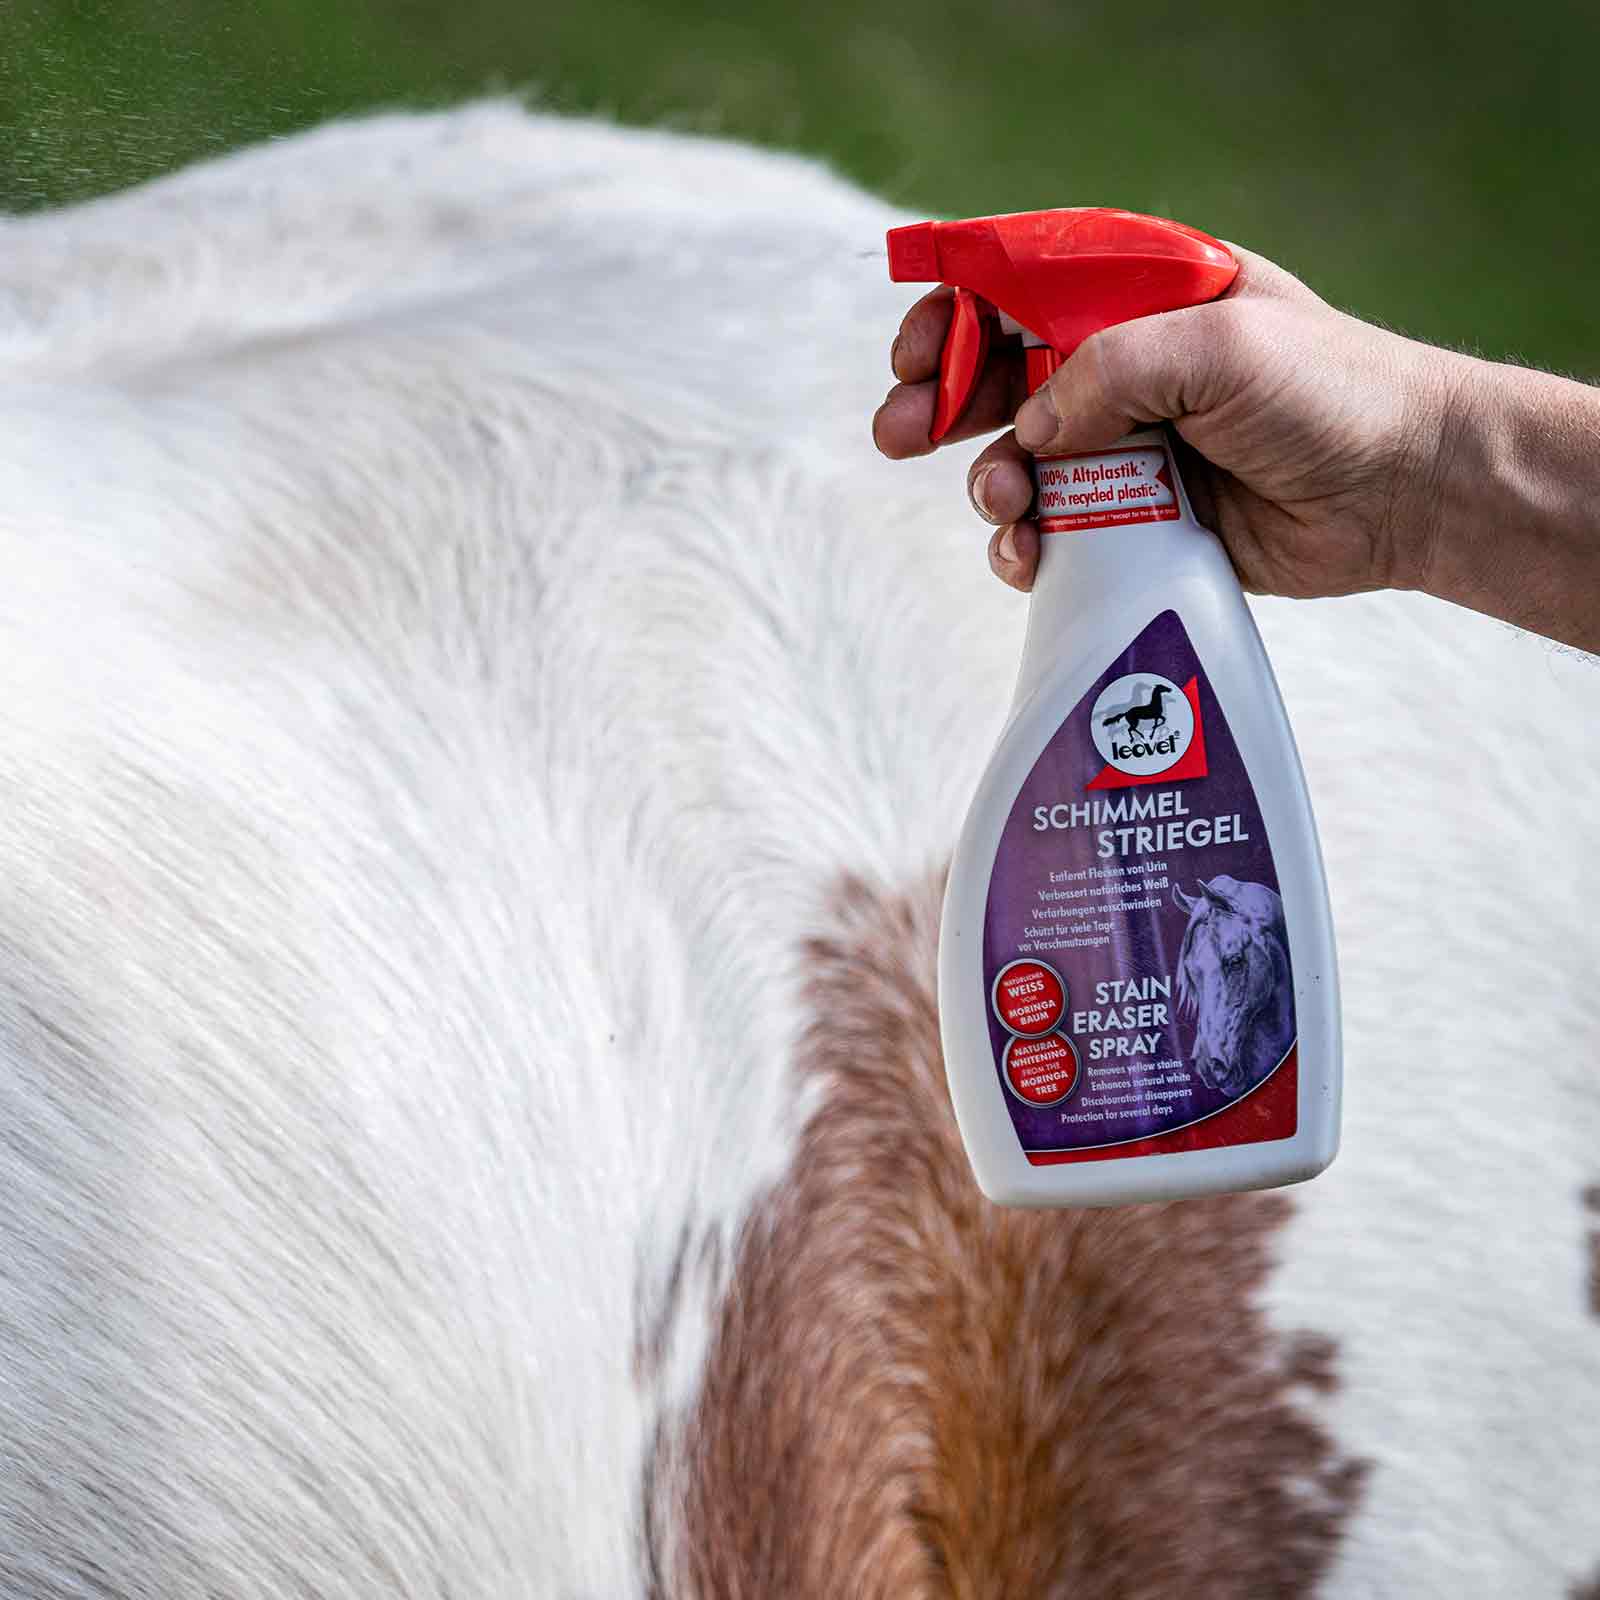 Leovet spray de curățare cai 550 ml